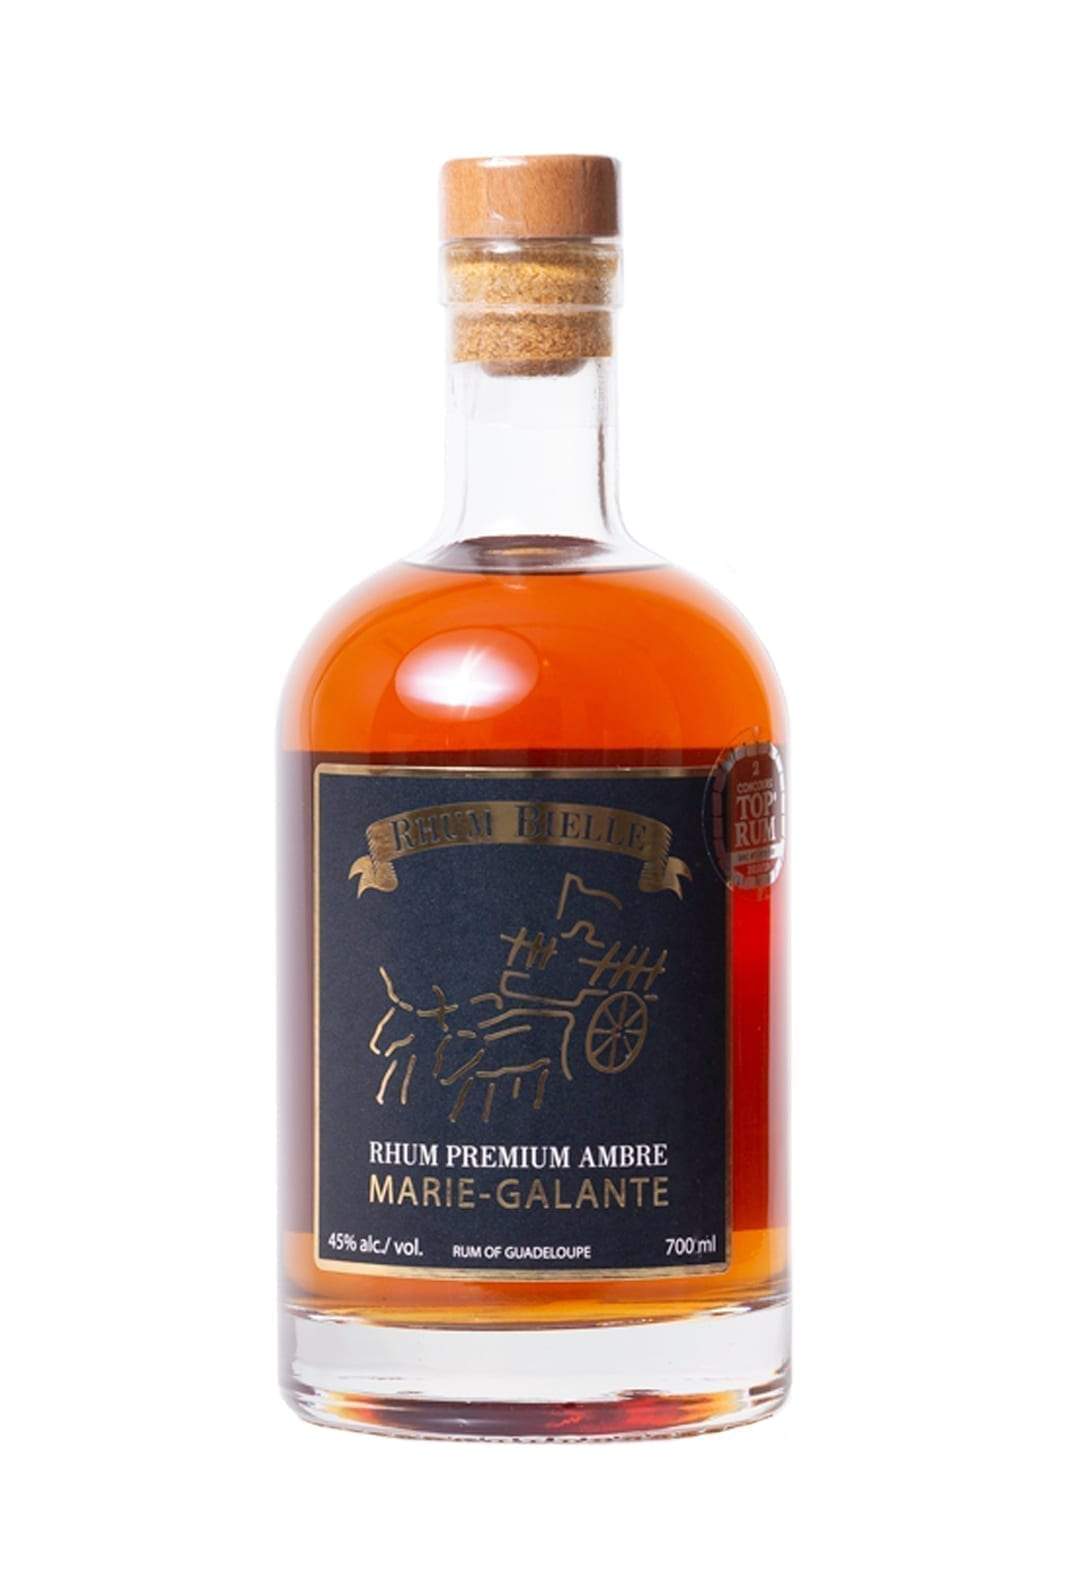 Bielle Rum Ambre 40% 700ml | Rum | Shop online at Spirits of France